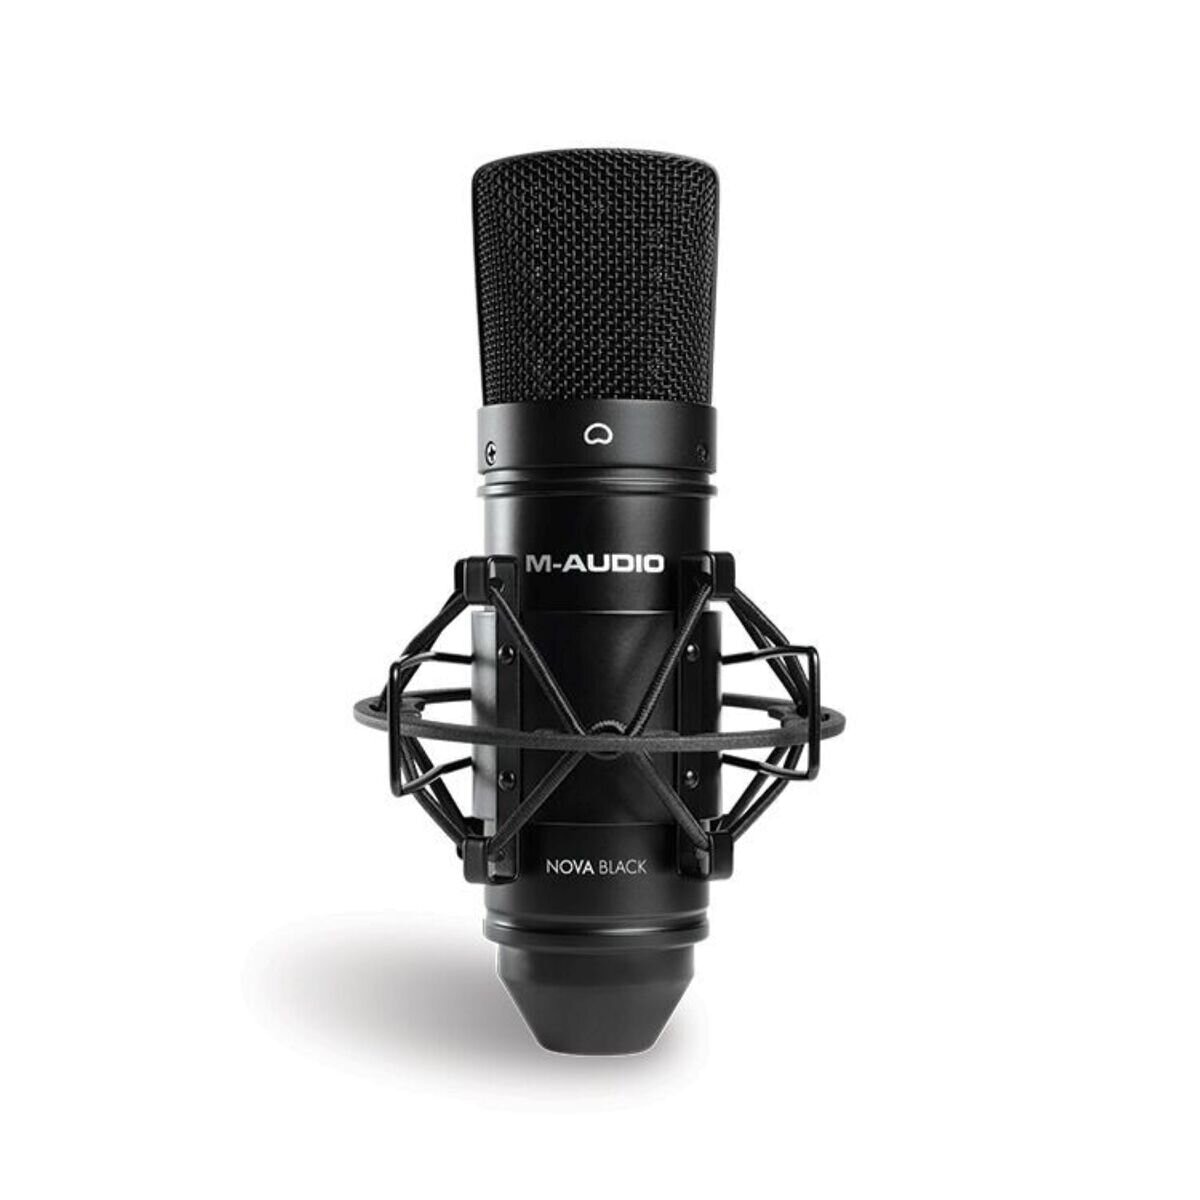 M-Audio ボーカルレコーディングセット AIR 192 4 Vocal Studio Pro